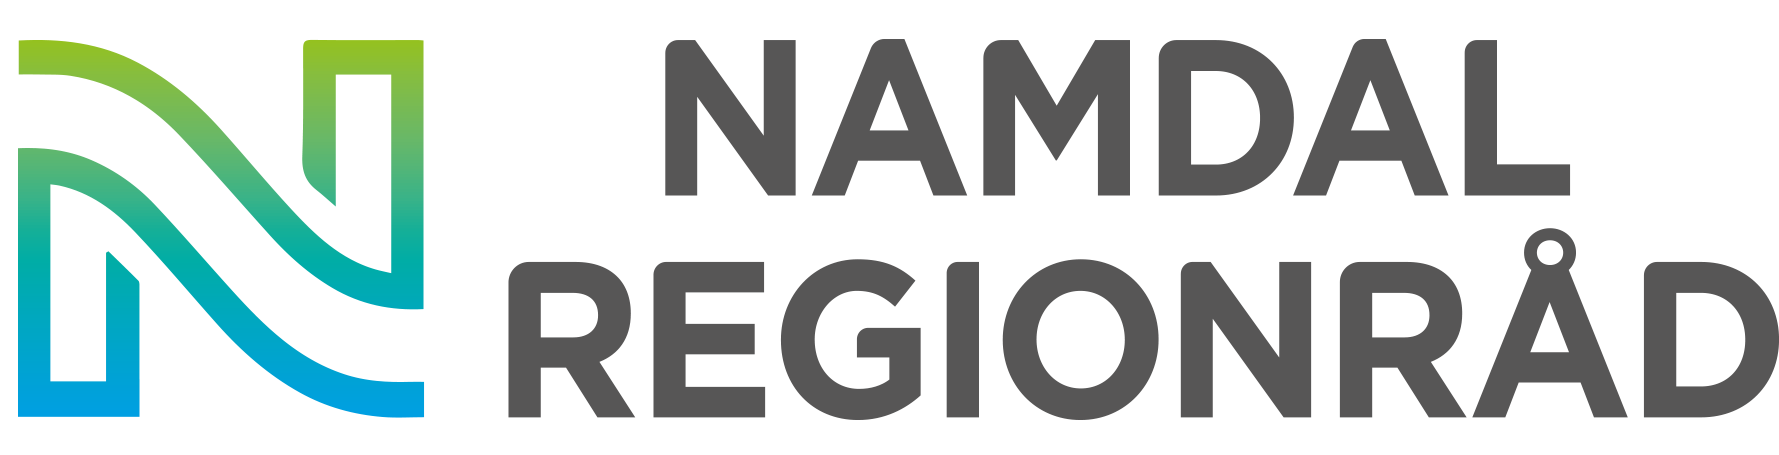 Namdal regionråd logo